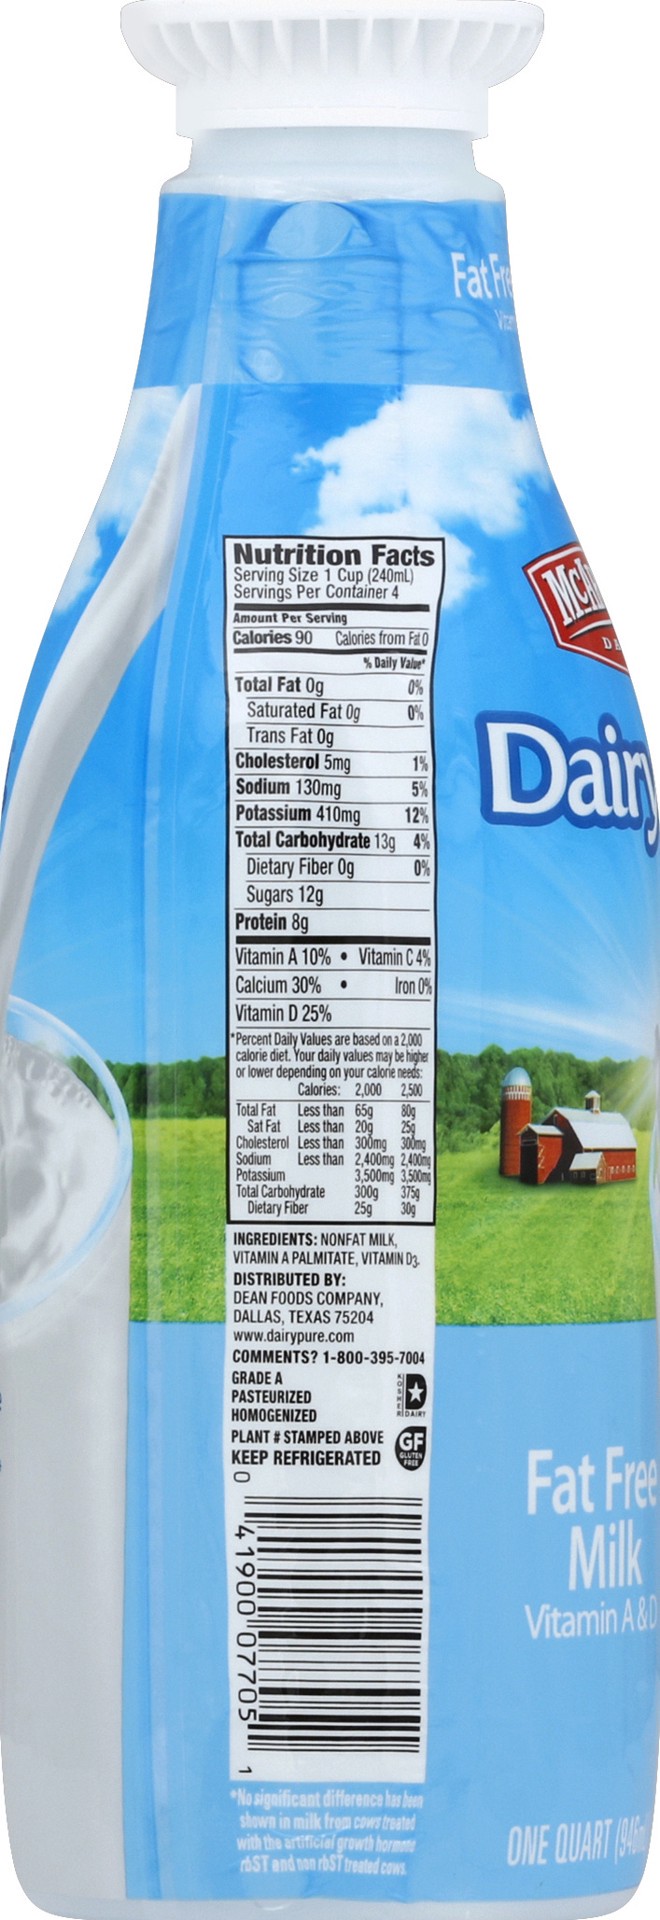 slide 3 of 3, Dairy Pure Dean's Dairy Pure Fat Free Milk Single, 1 qt